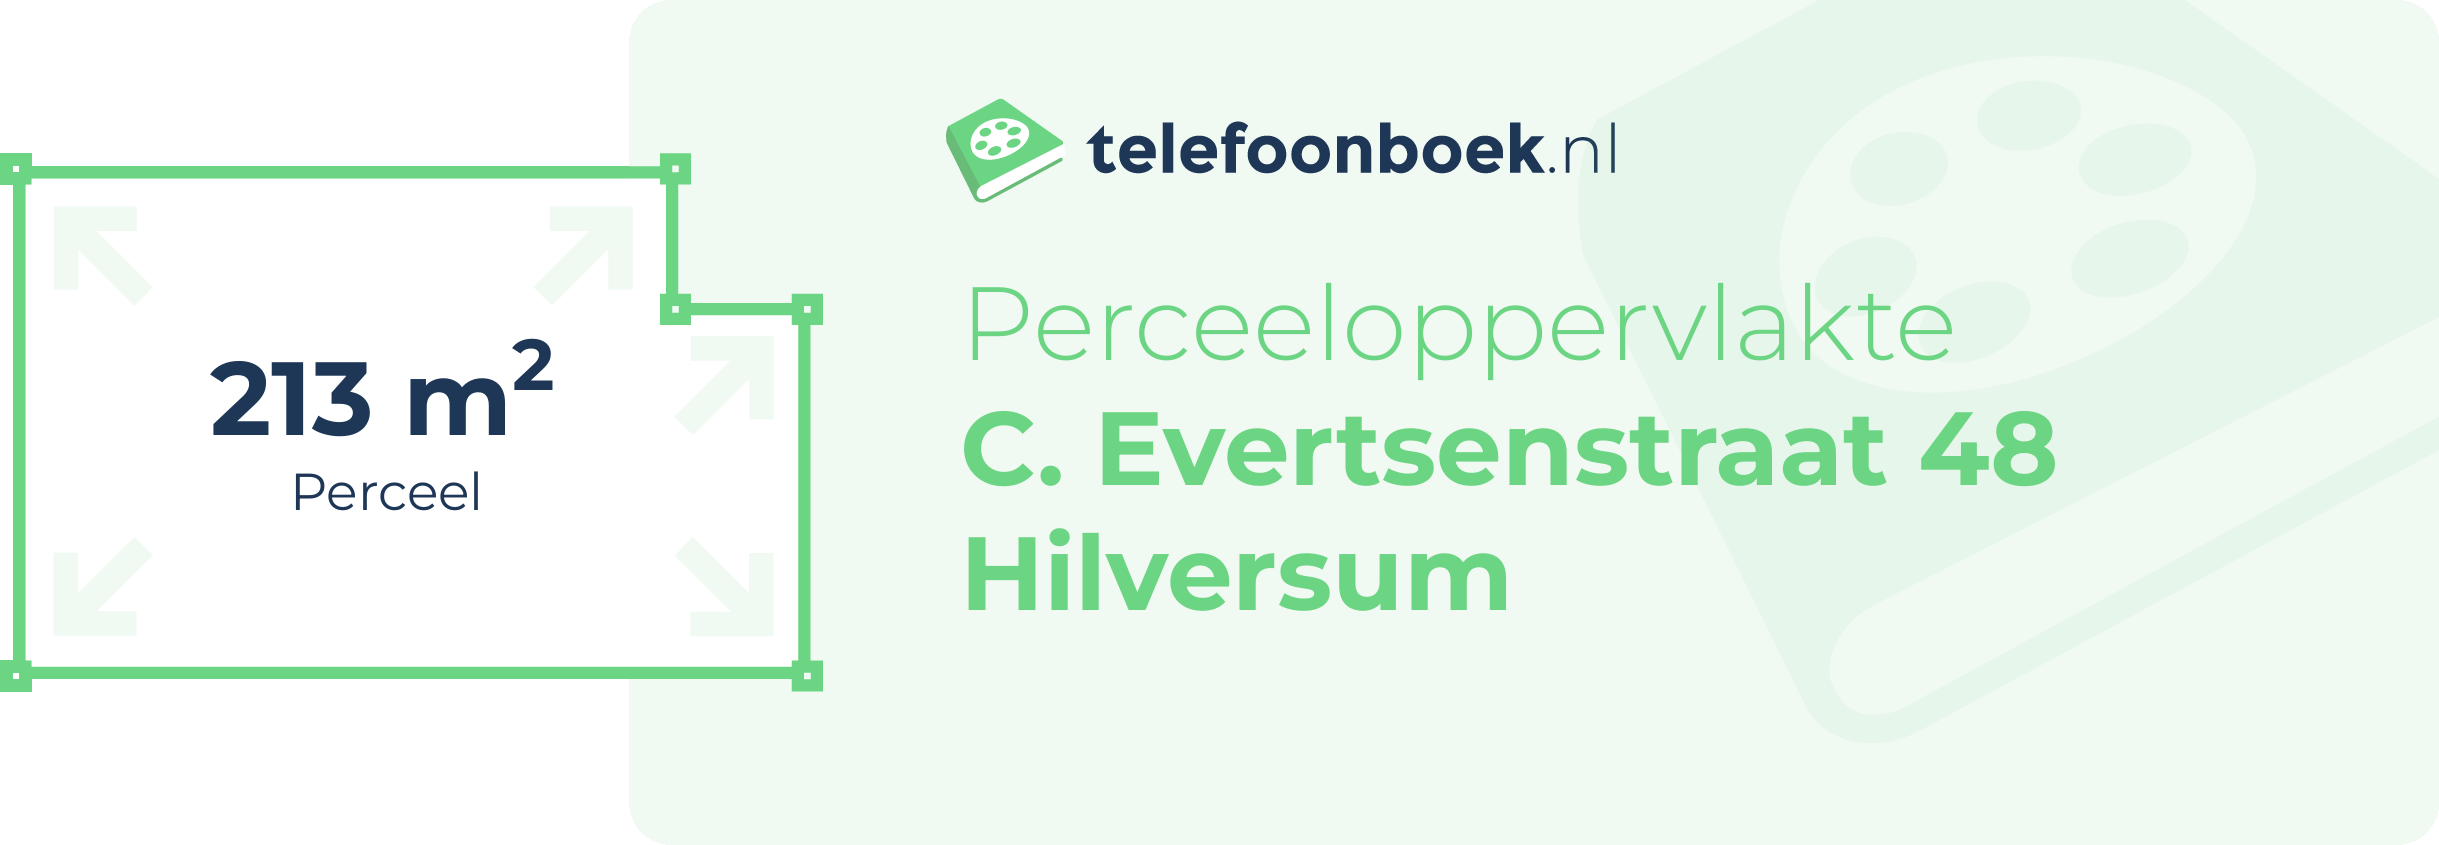 Perceeloppervlakte C. Evertsenstraat 48 Hilversum